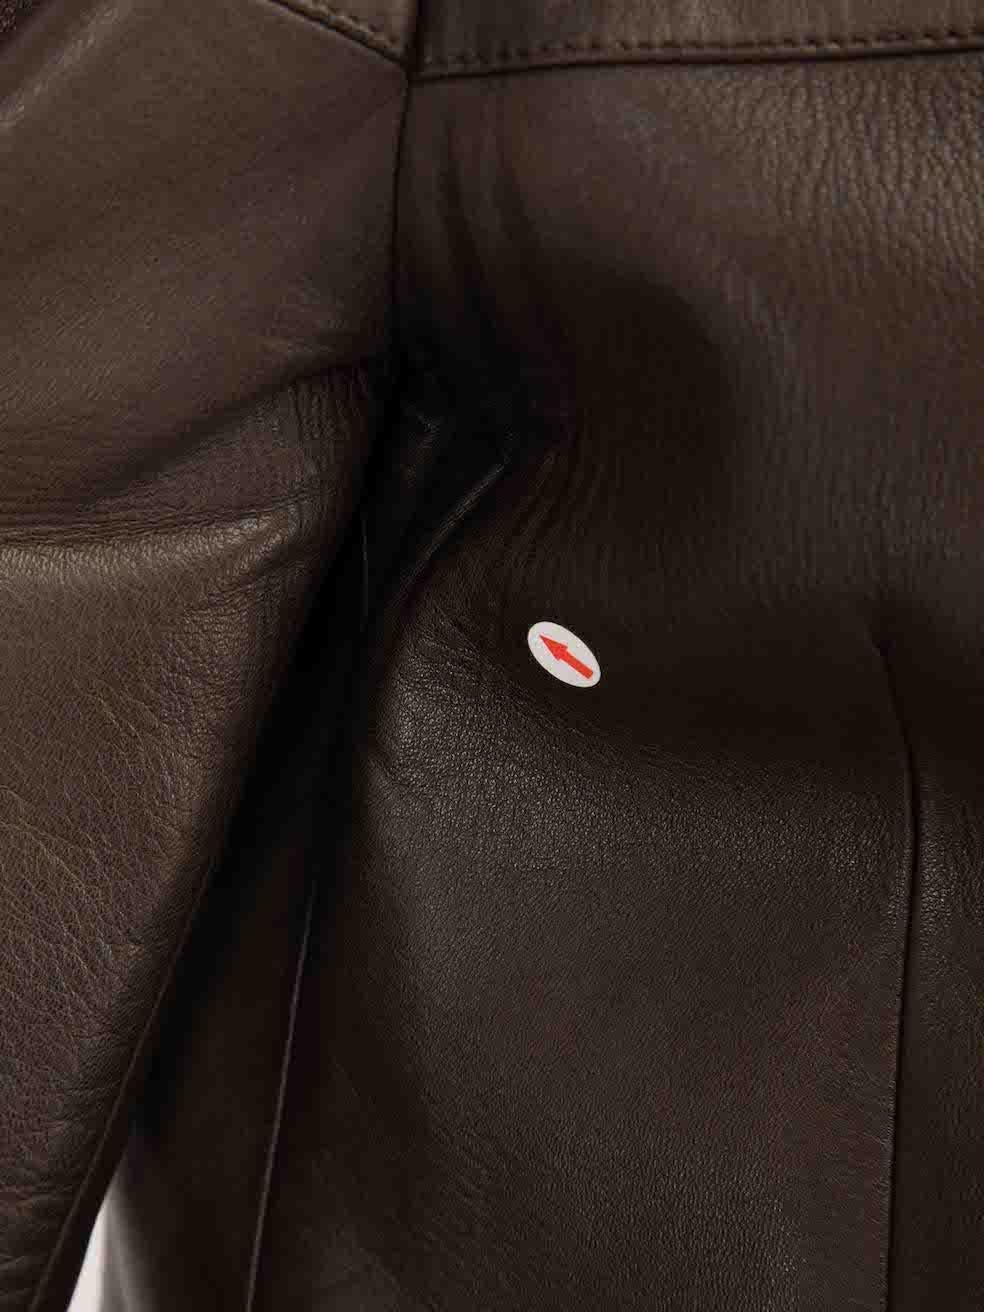 Jil Sander Brown Leather Single Breasted Blazer Size M For Sale 2